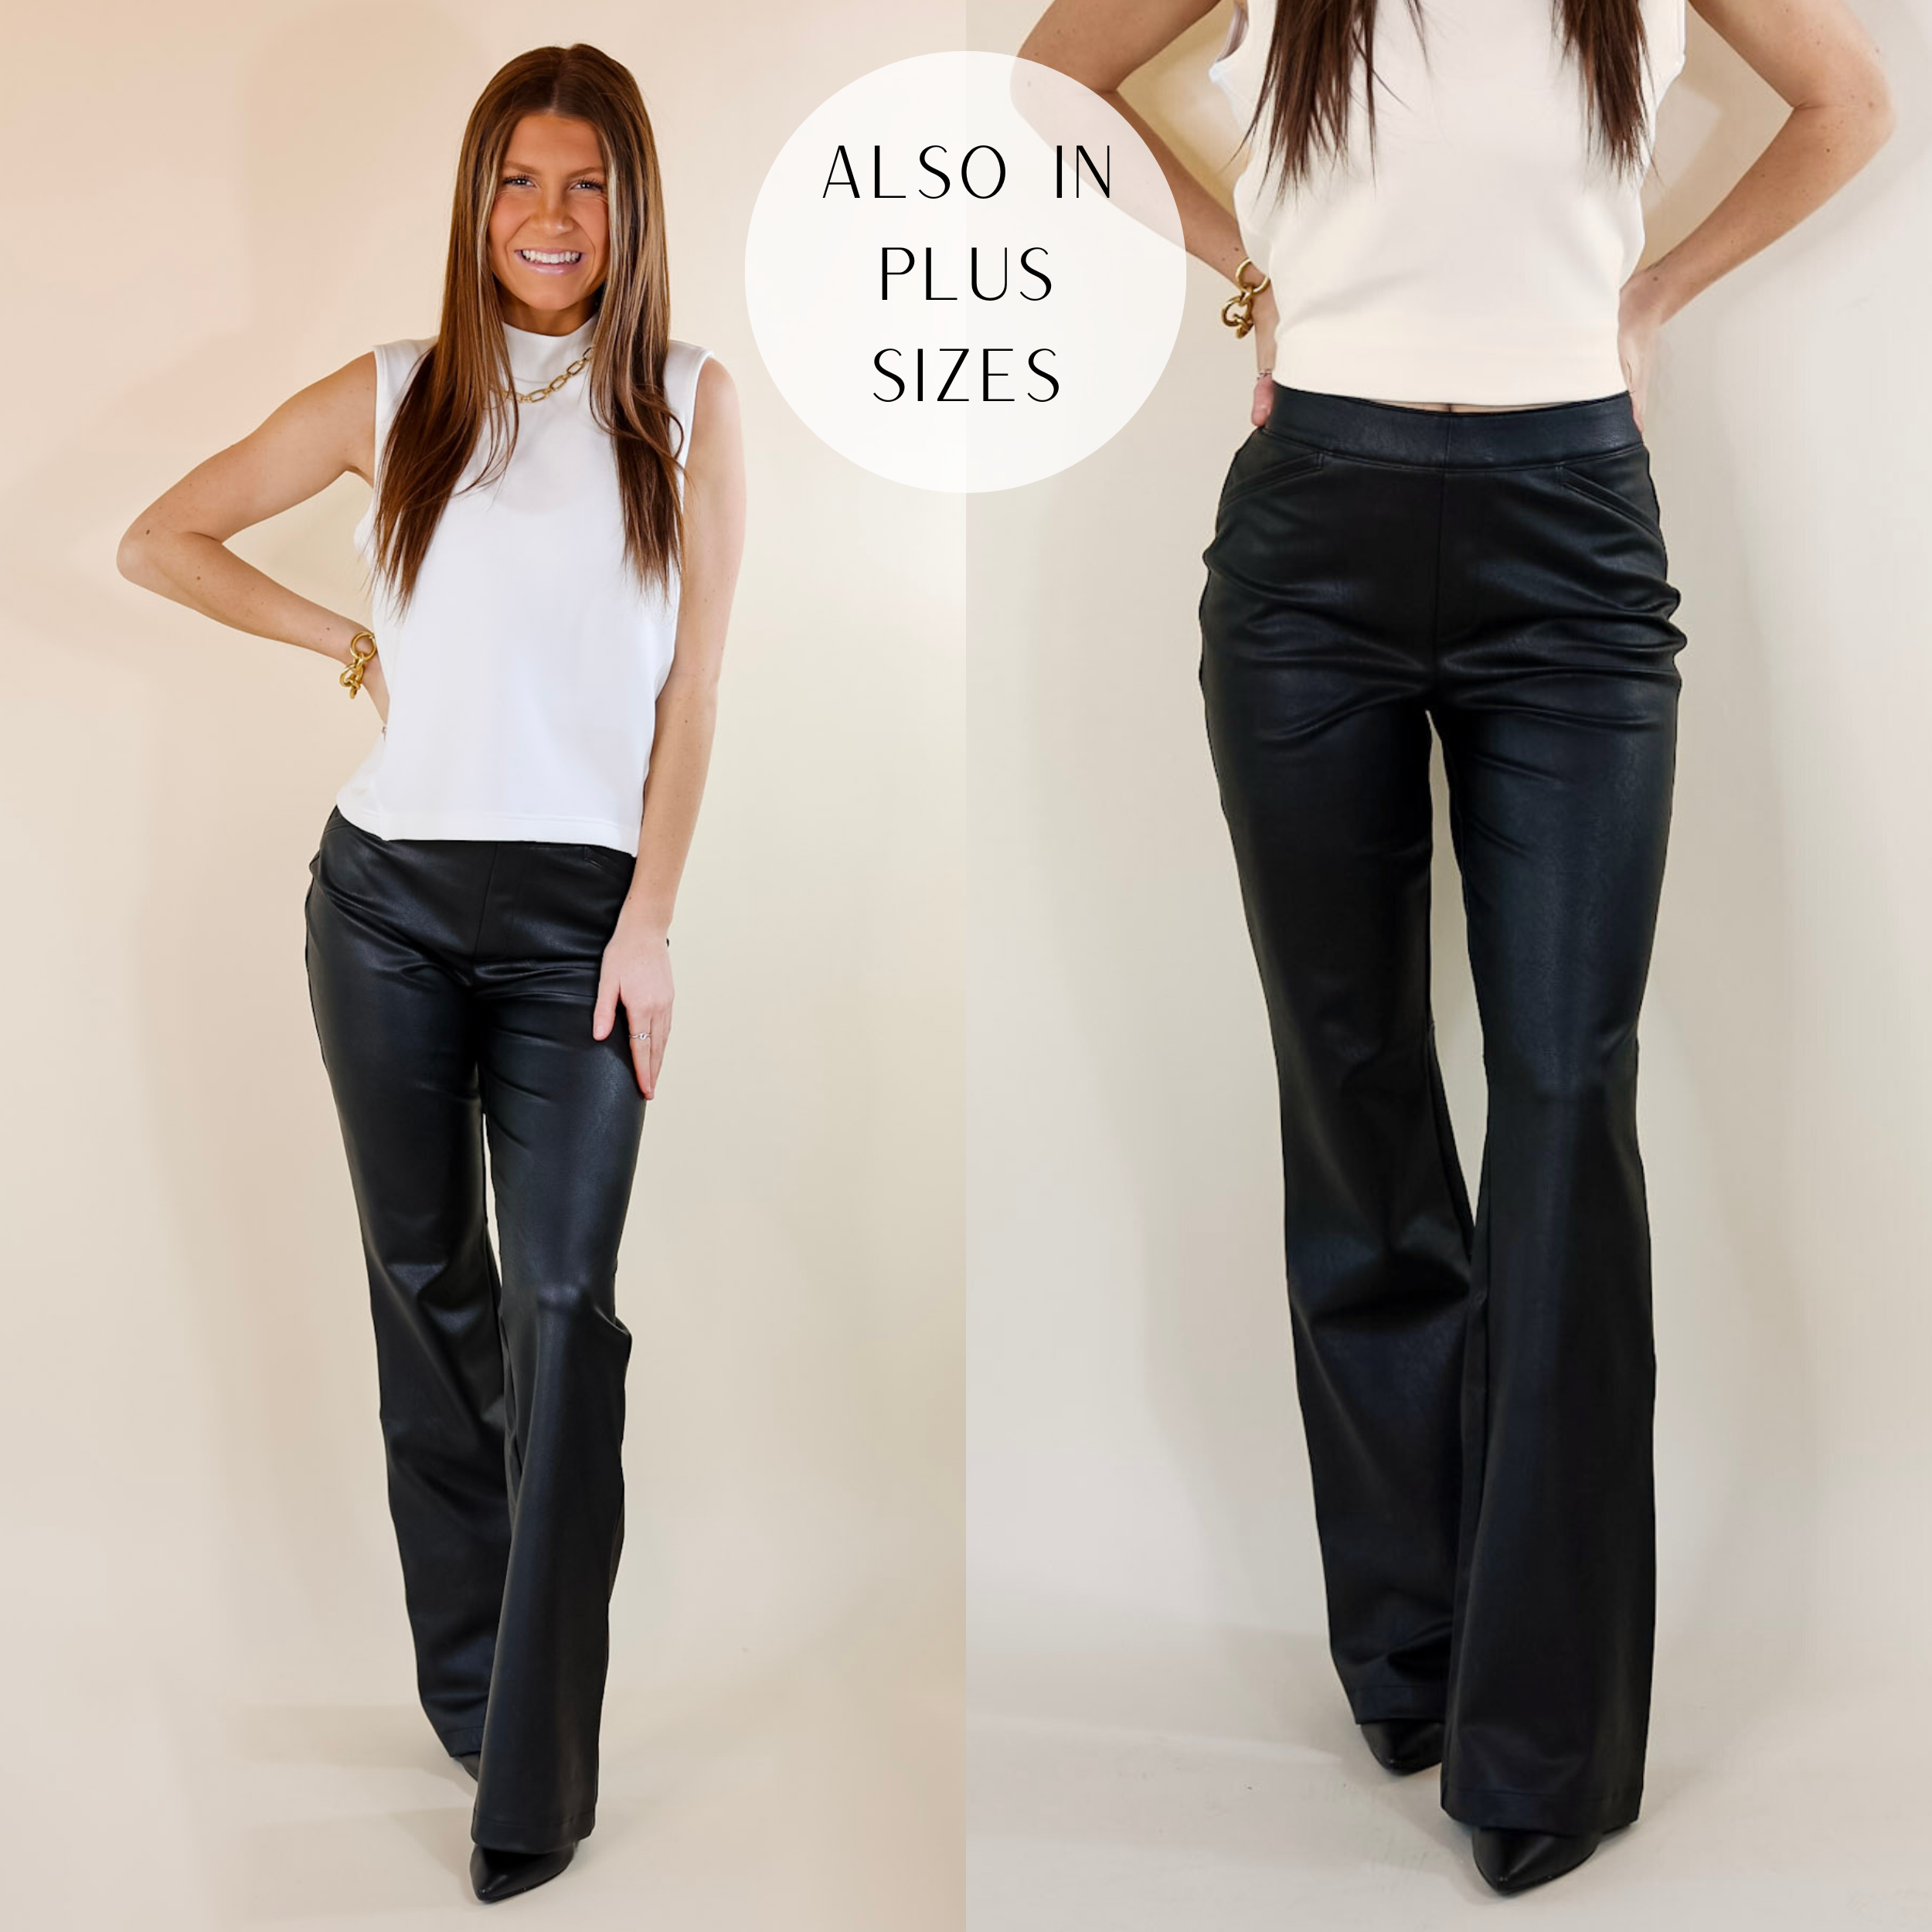 Spanx Shop Plus Size Pants 